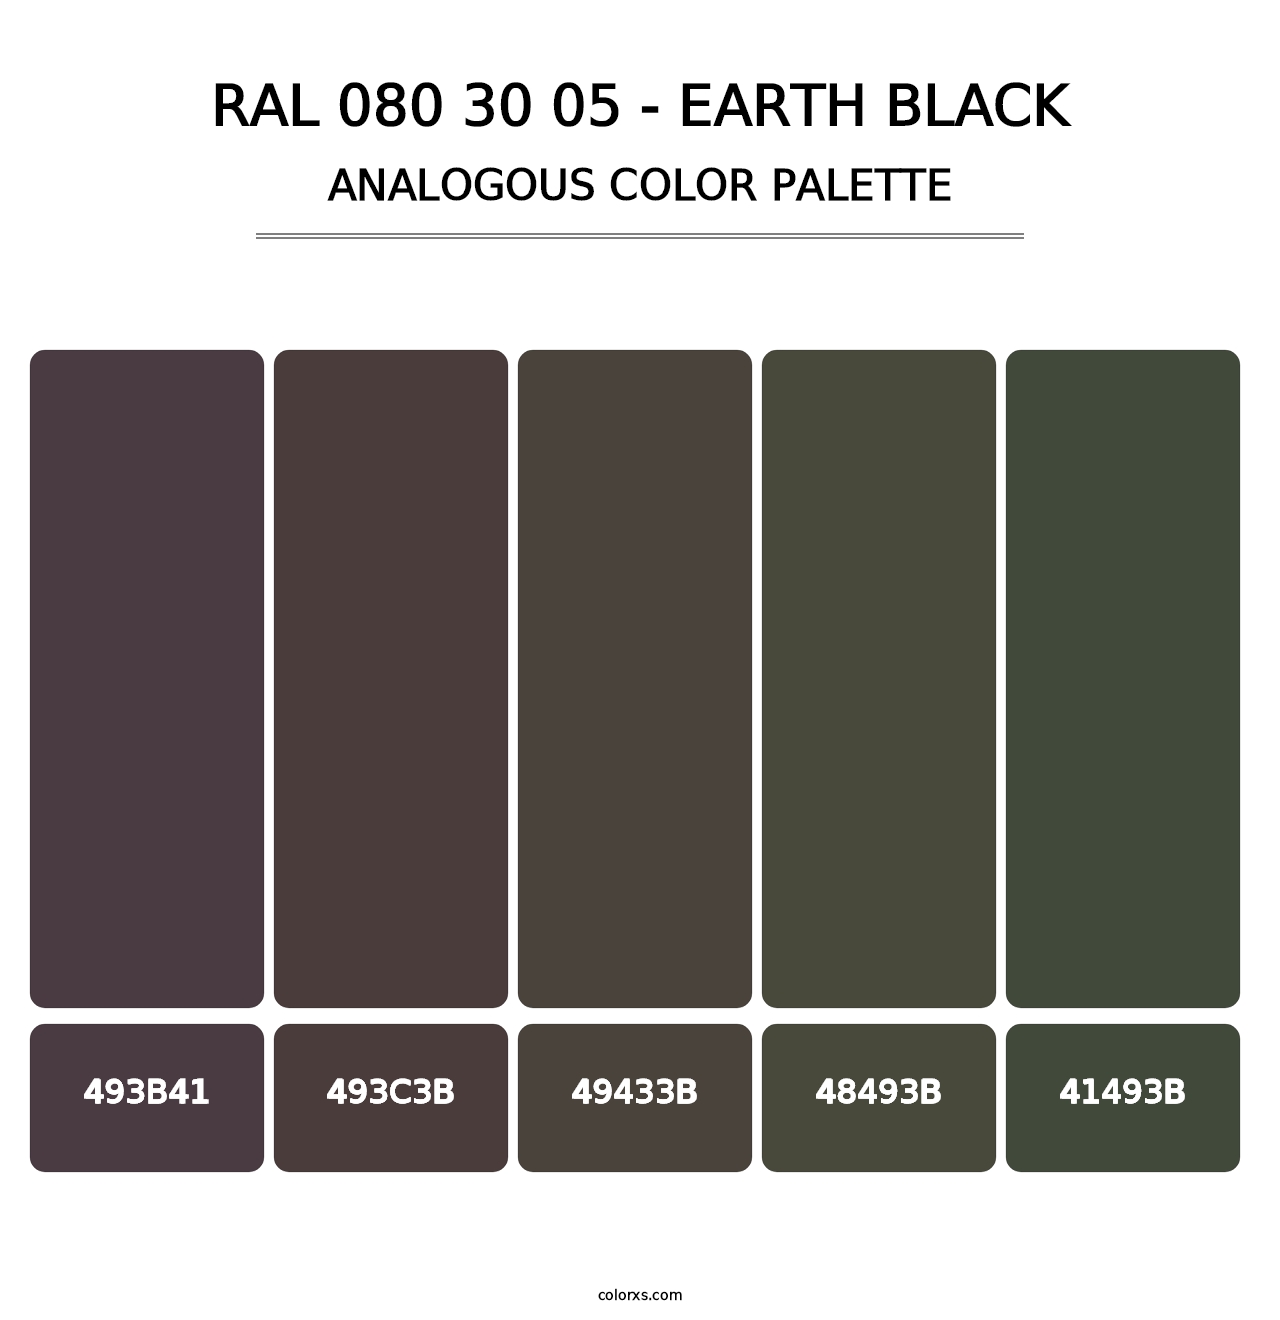 RAL 080 30 05 - Earth Black - Analogous Color Palette